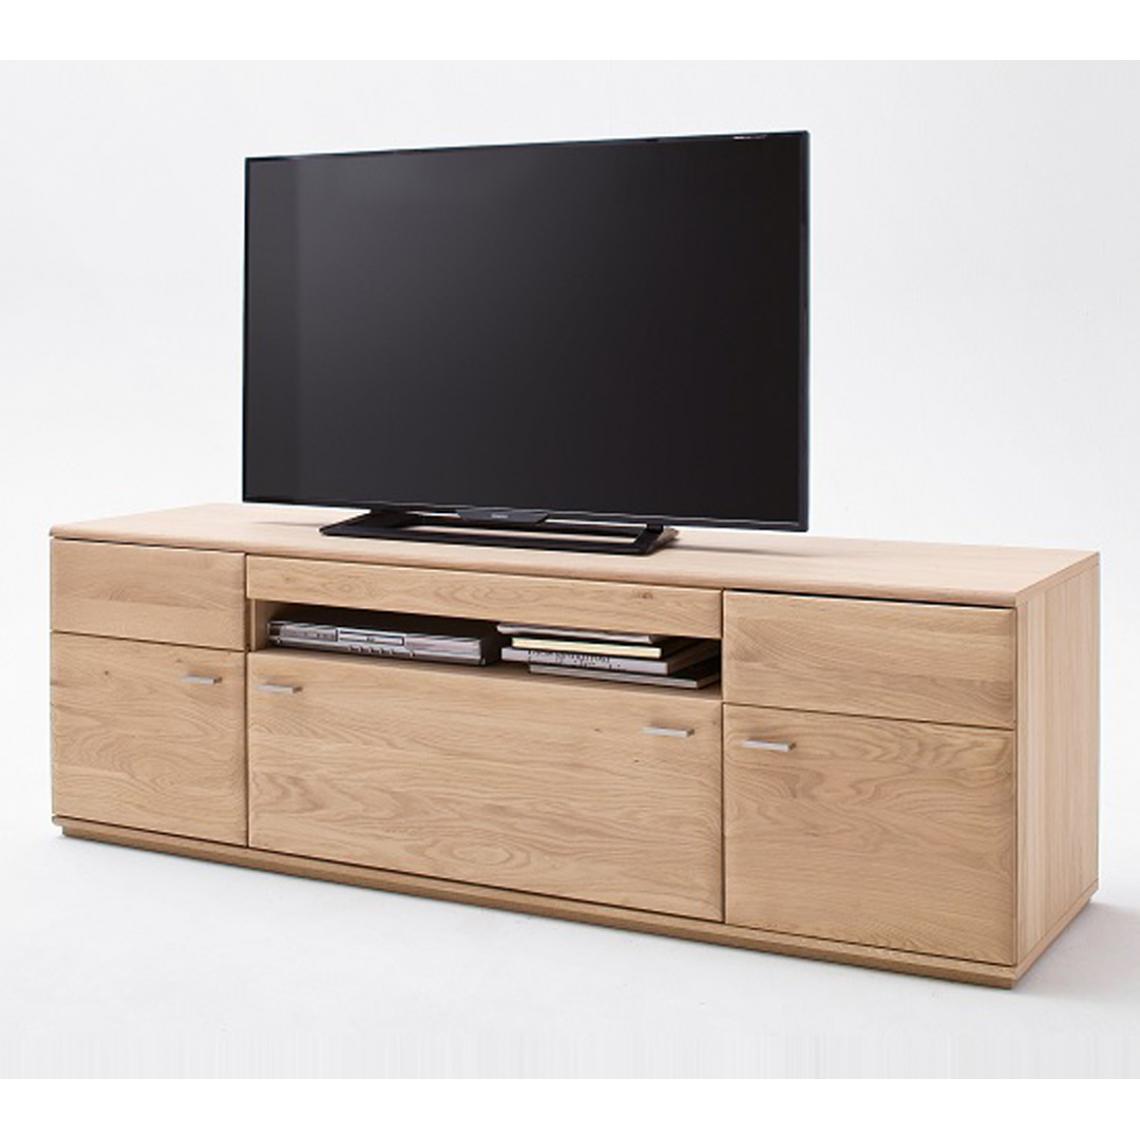 Pegane - Meuble TV en chêne massif bianco - L.150 x H.58 x P.50 cm - Meubles TV, Hi-Fi